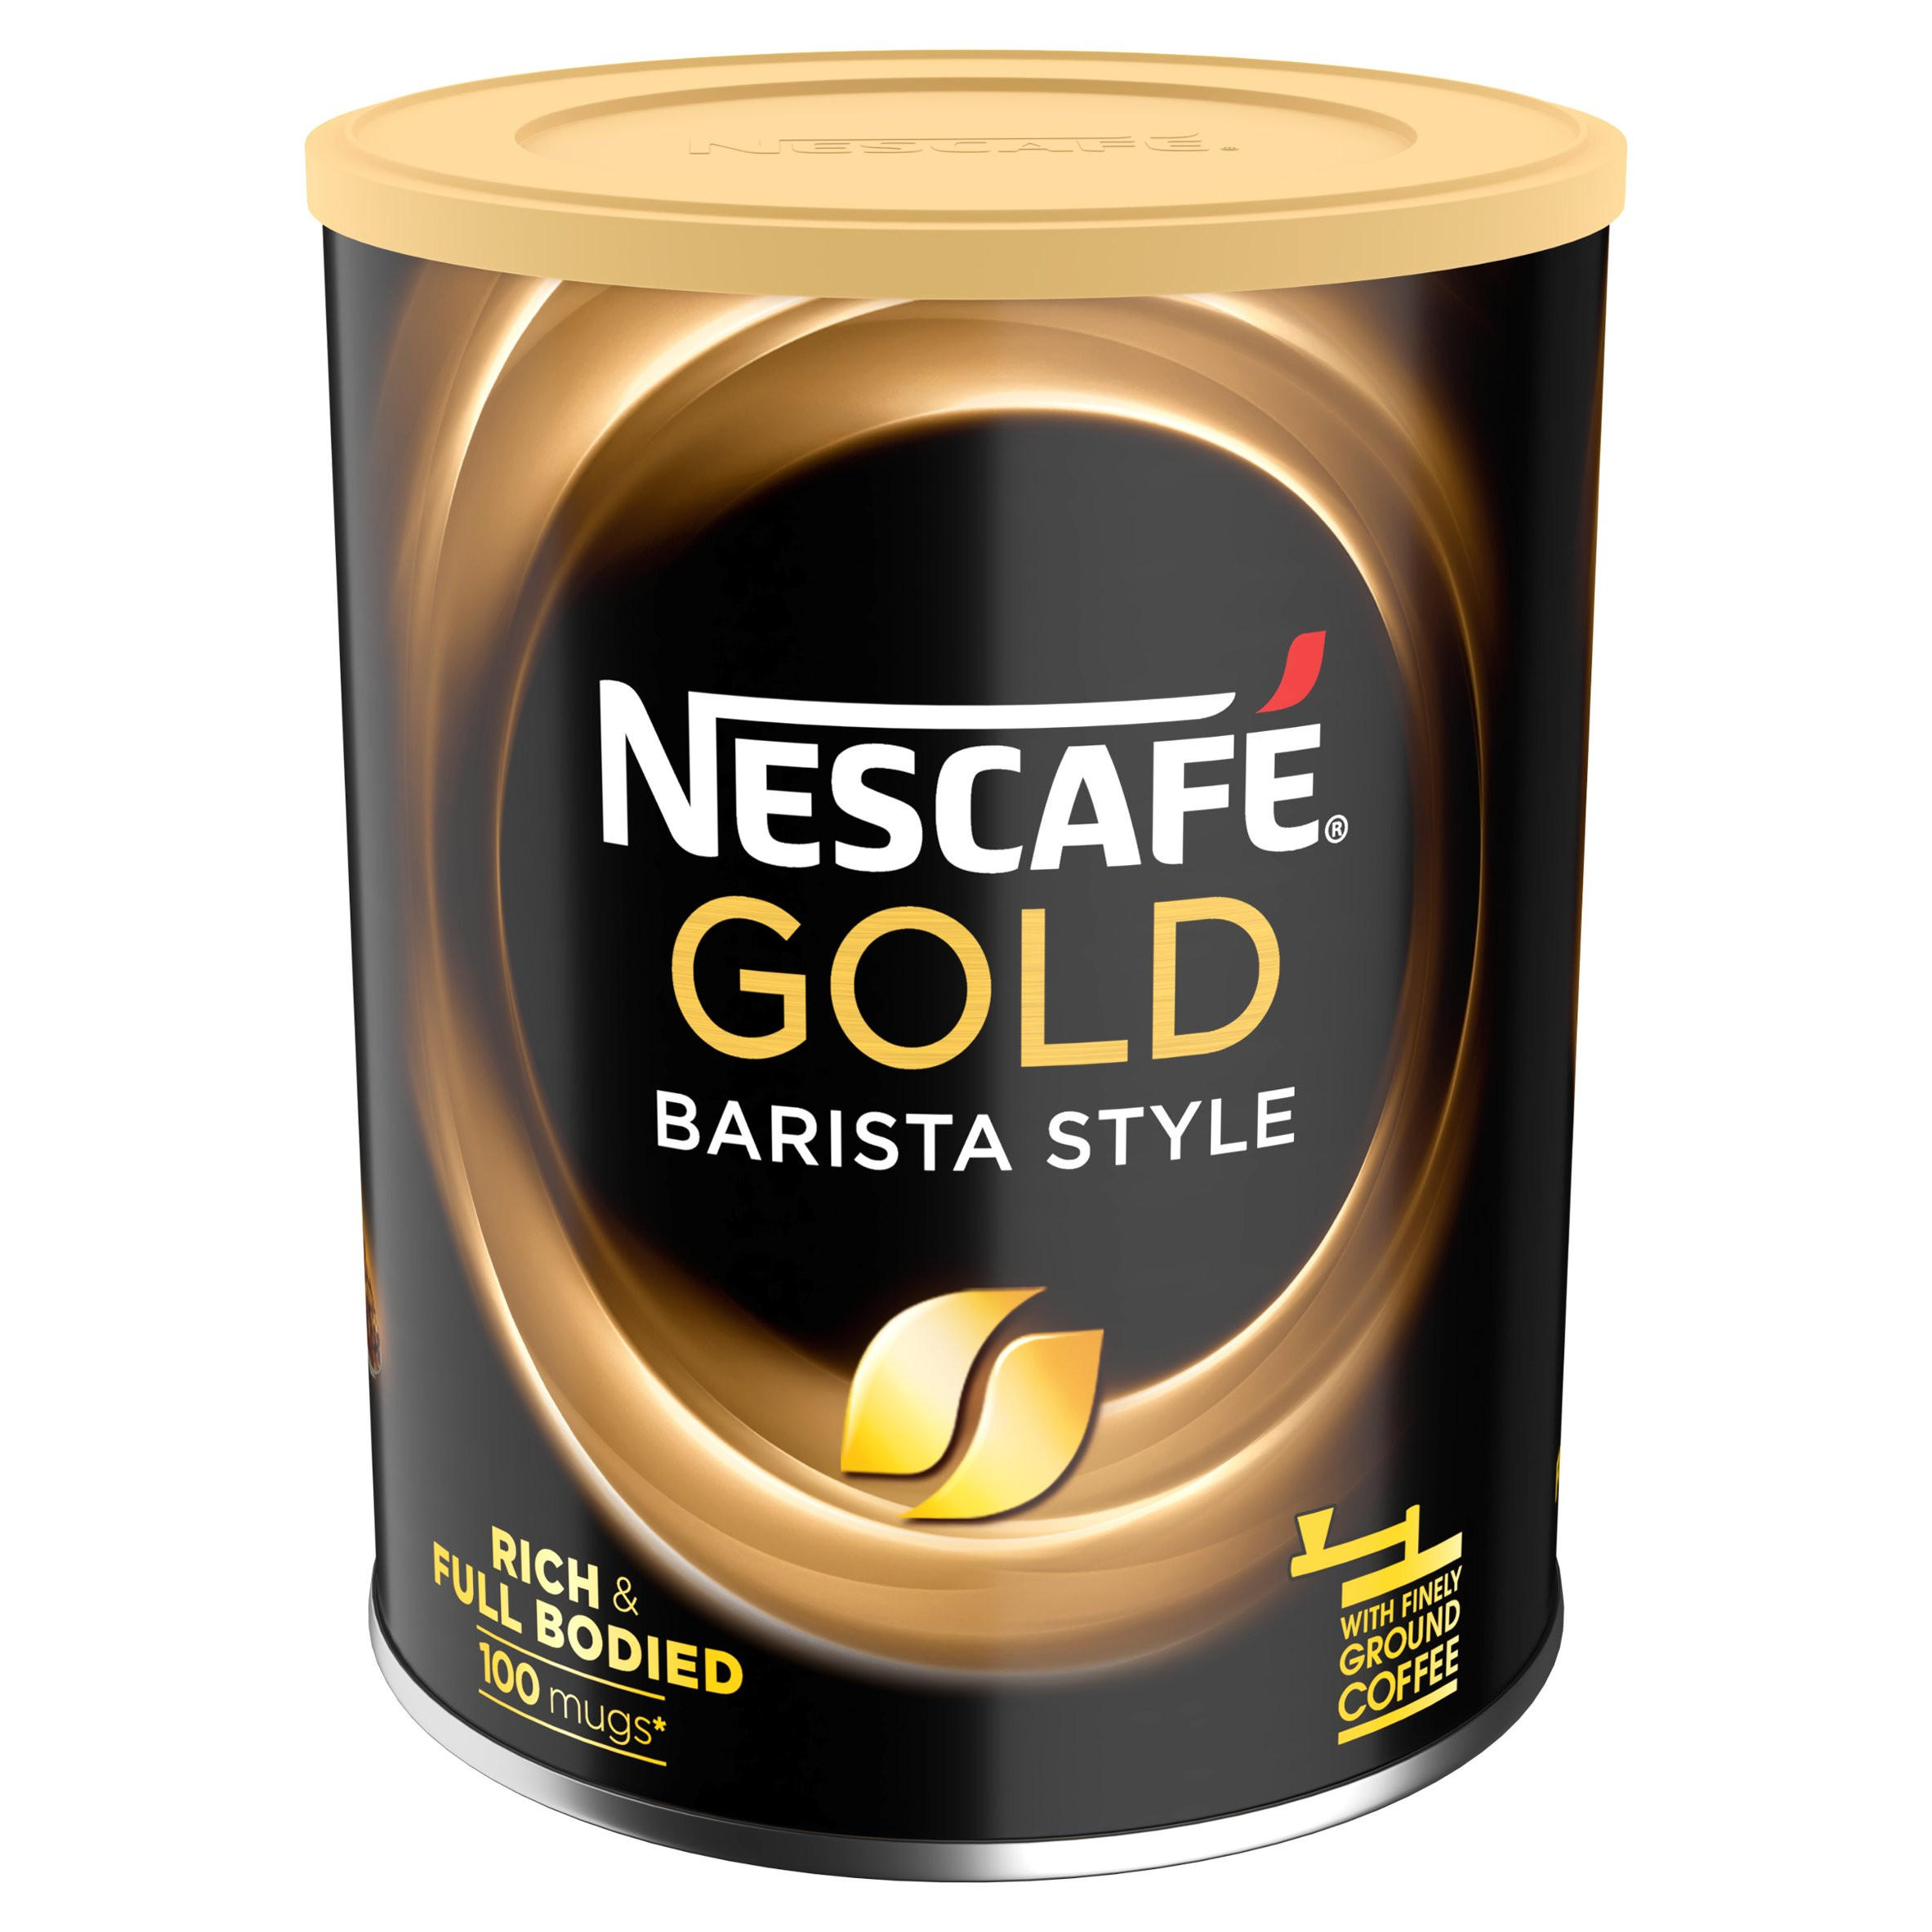 Кофе бариста голд. Кофе Nescafe Gold. Нескафе Голд бариста. Nescafe Gold Premium Blend. Нескафе бариста латте стайл.